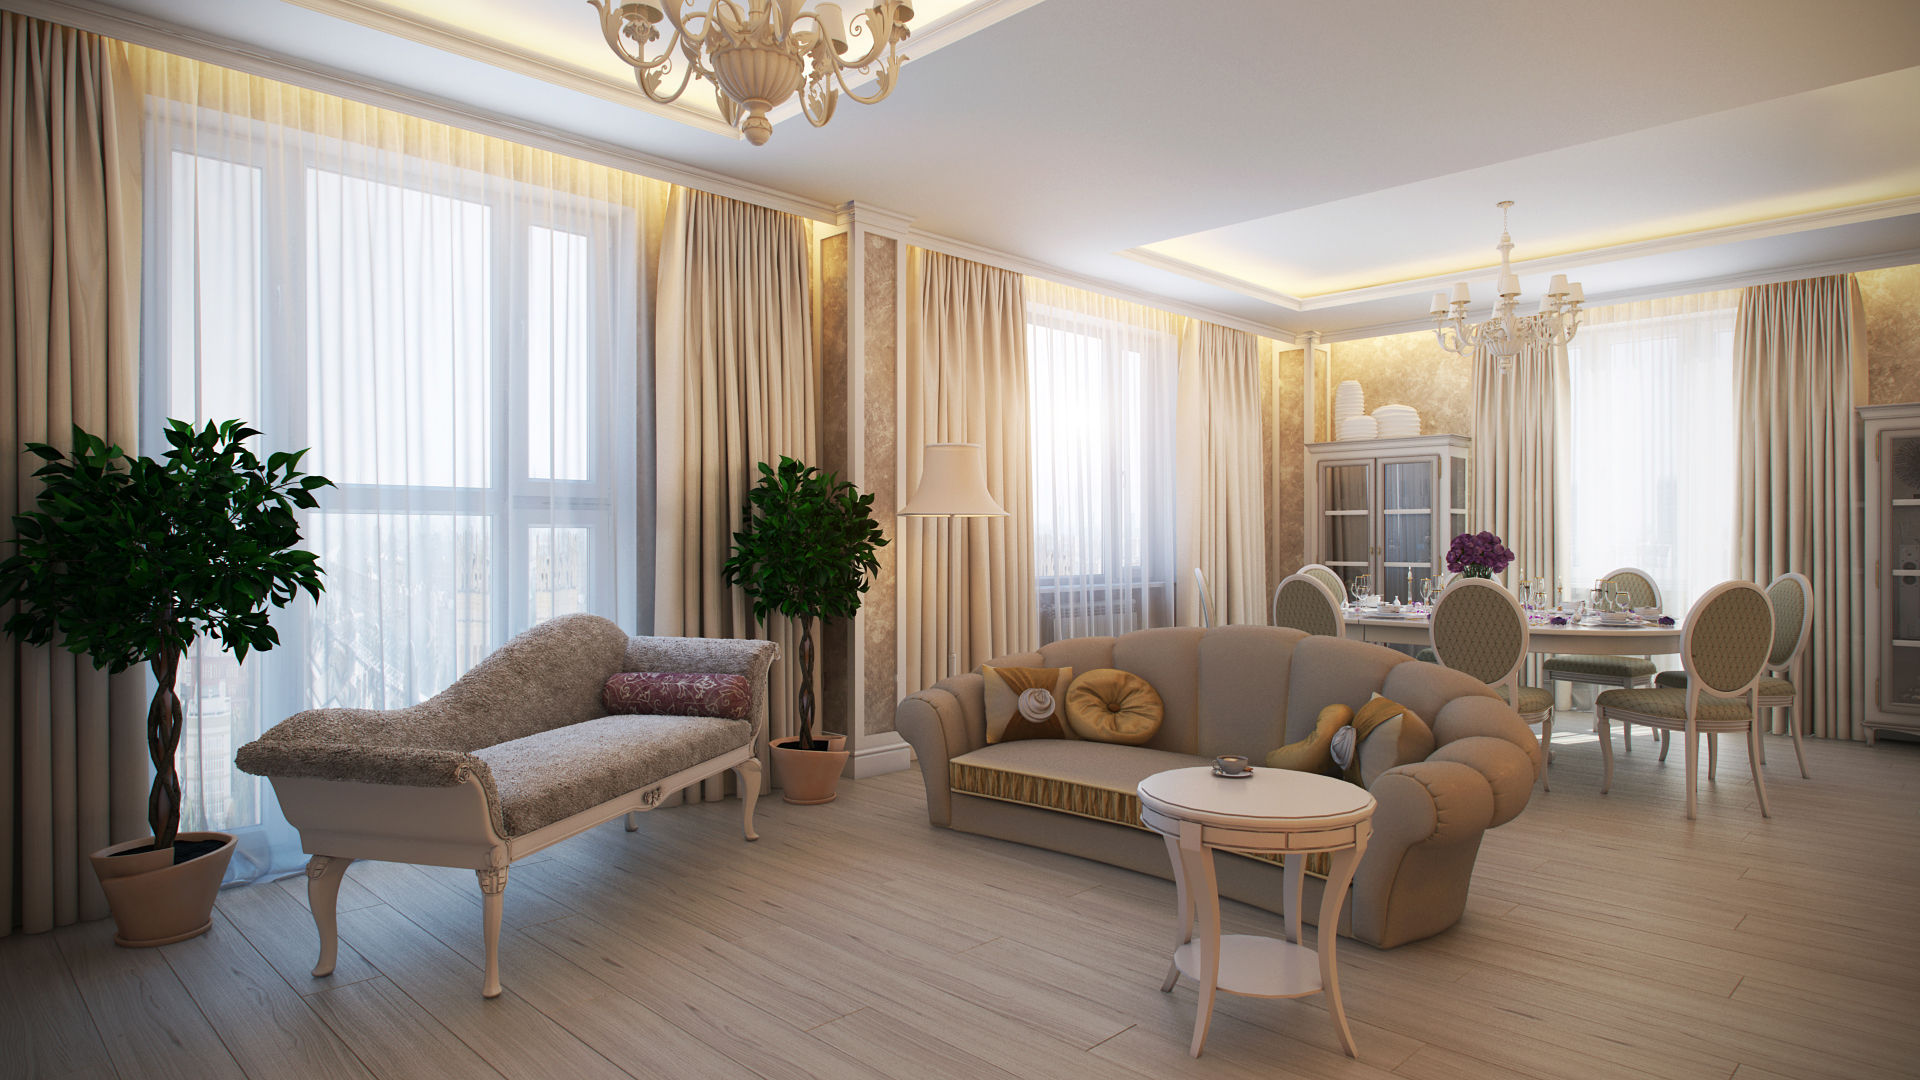 Четырехкомнатная квартира в классическом стиле, Details, design studio Details, design studio Classic style living room